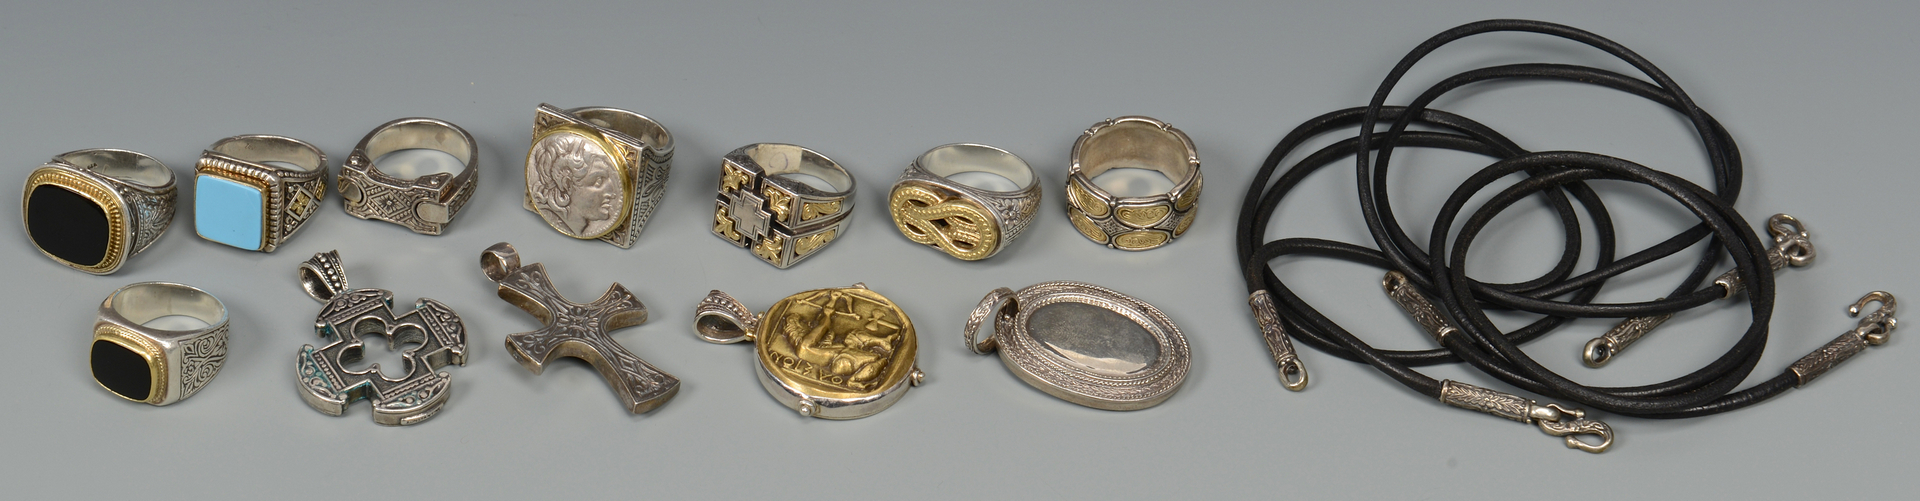 Lot 798: Group of Konstantino Men's Jewelry